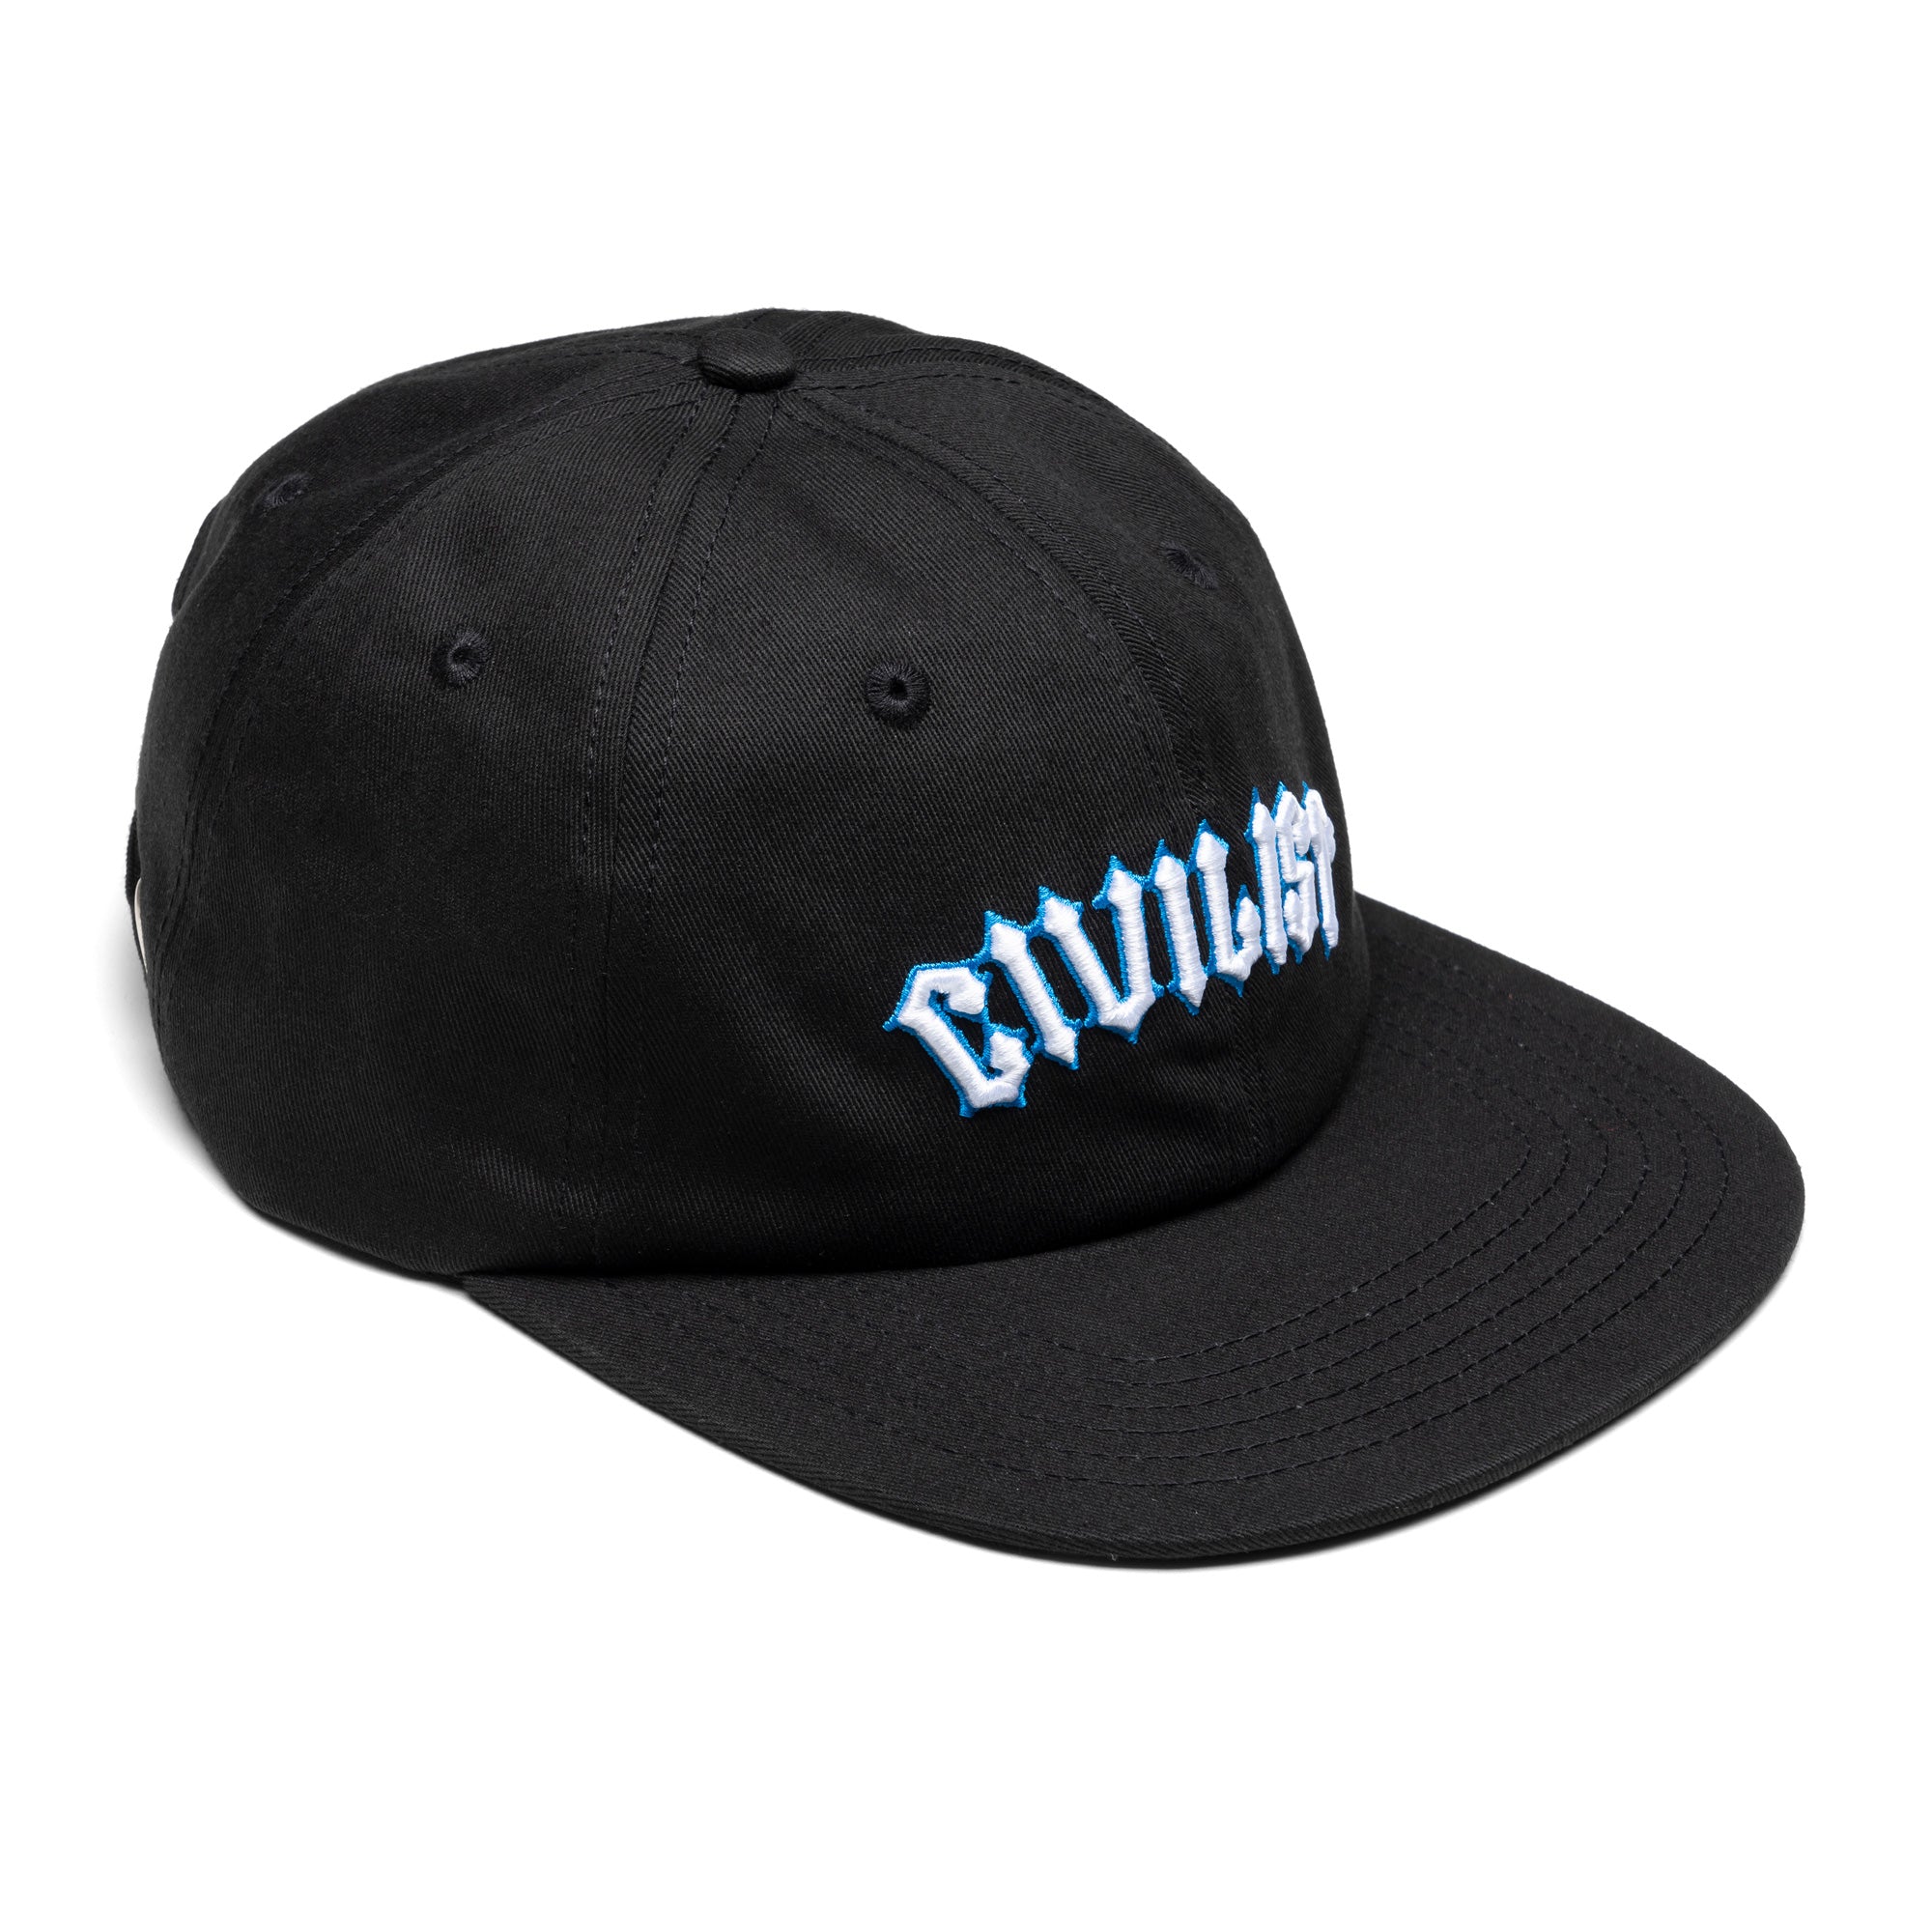 Civilist Spike Cap - Black